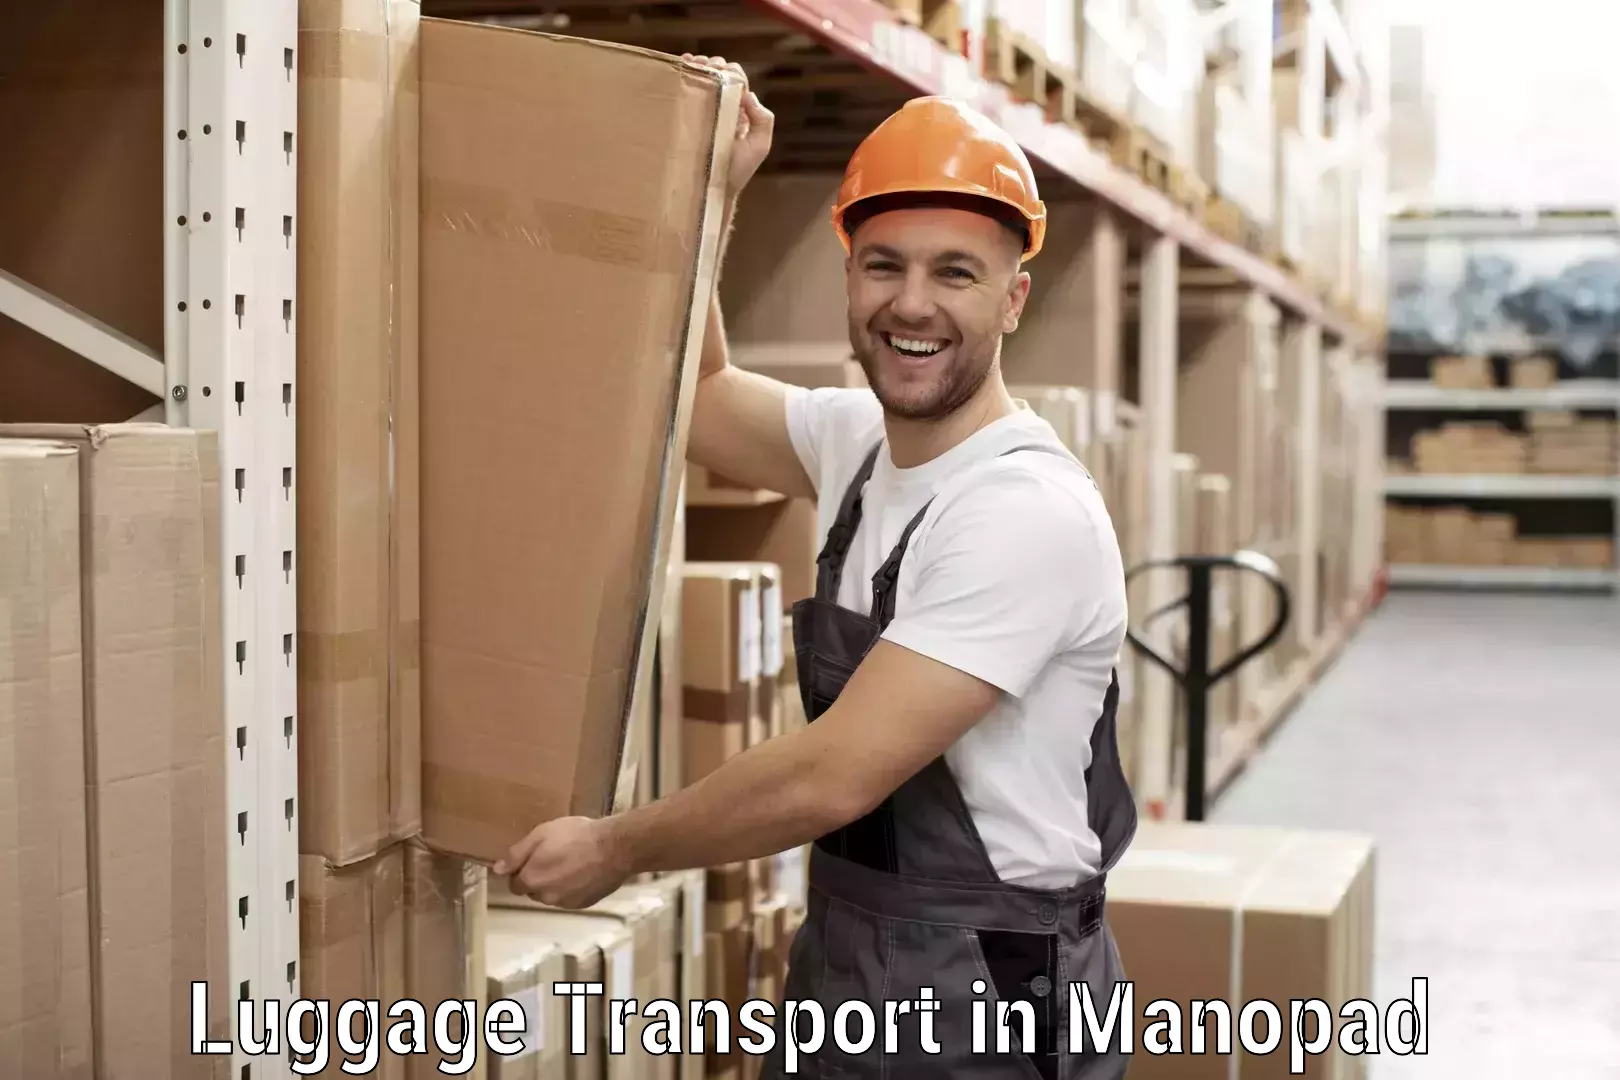 Express baggage shipping in Manopad